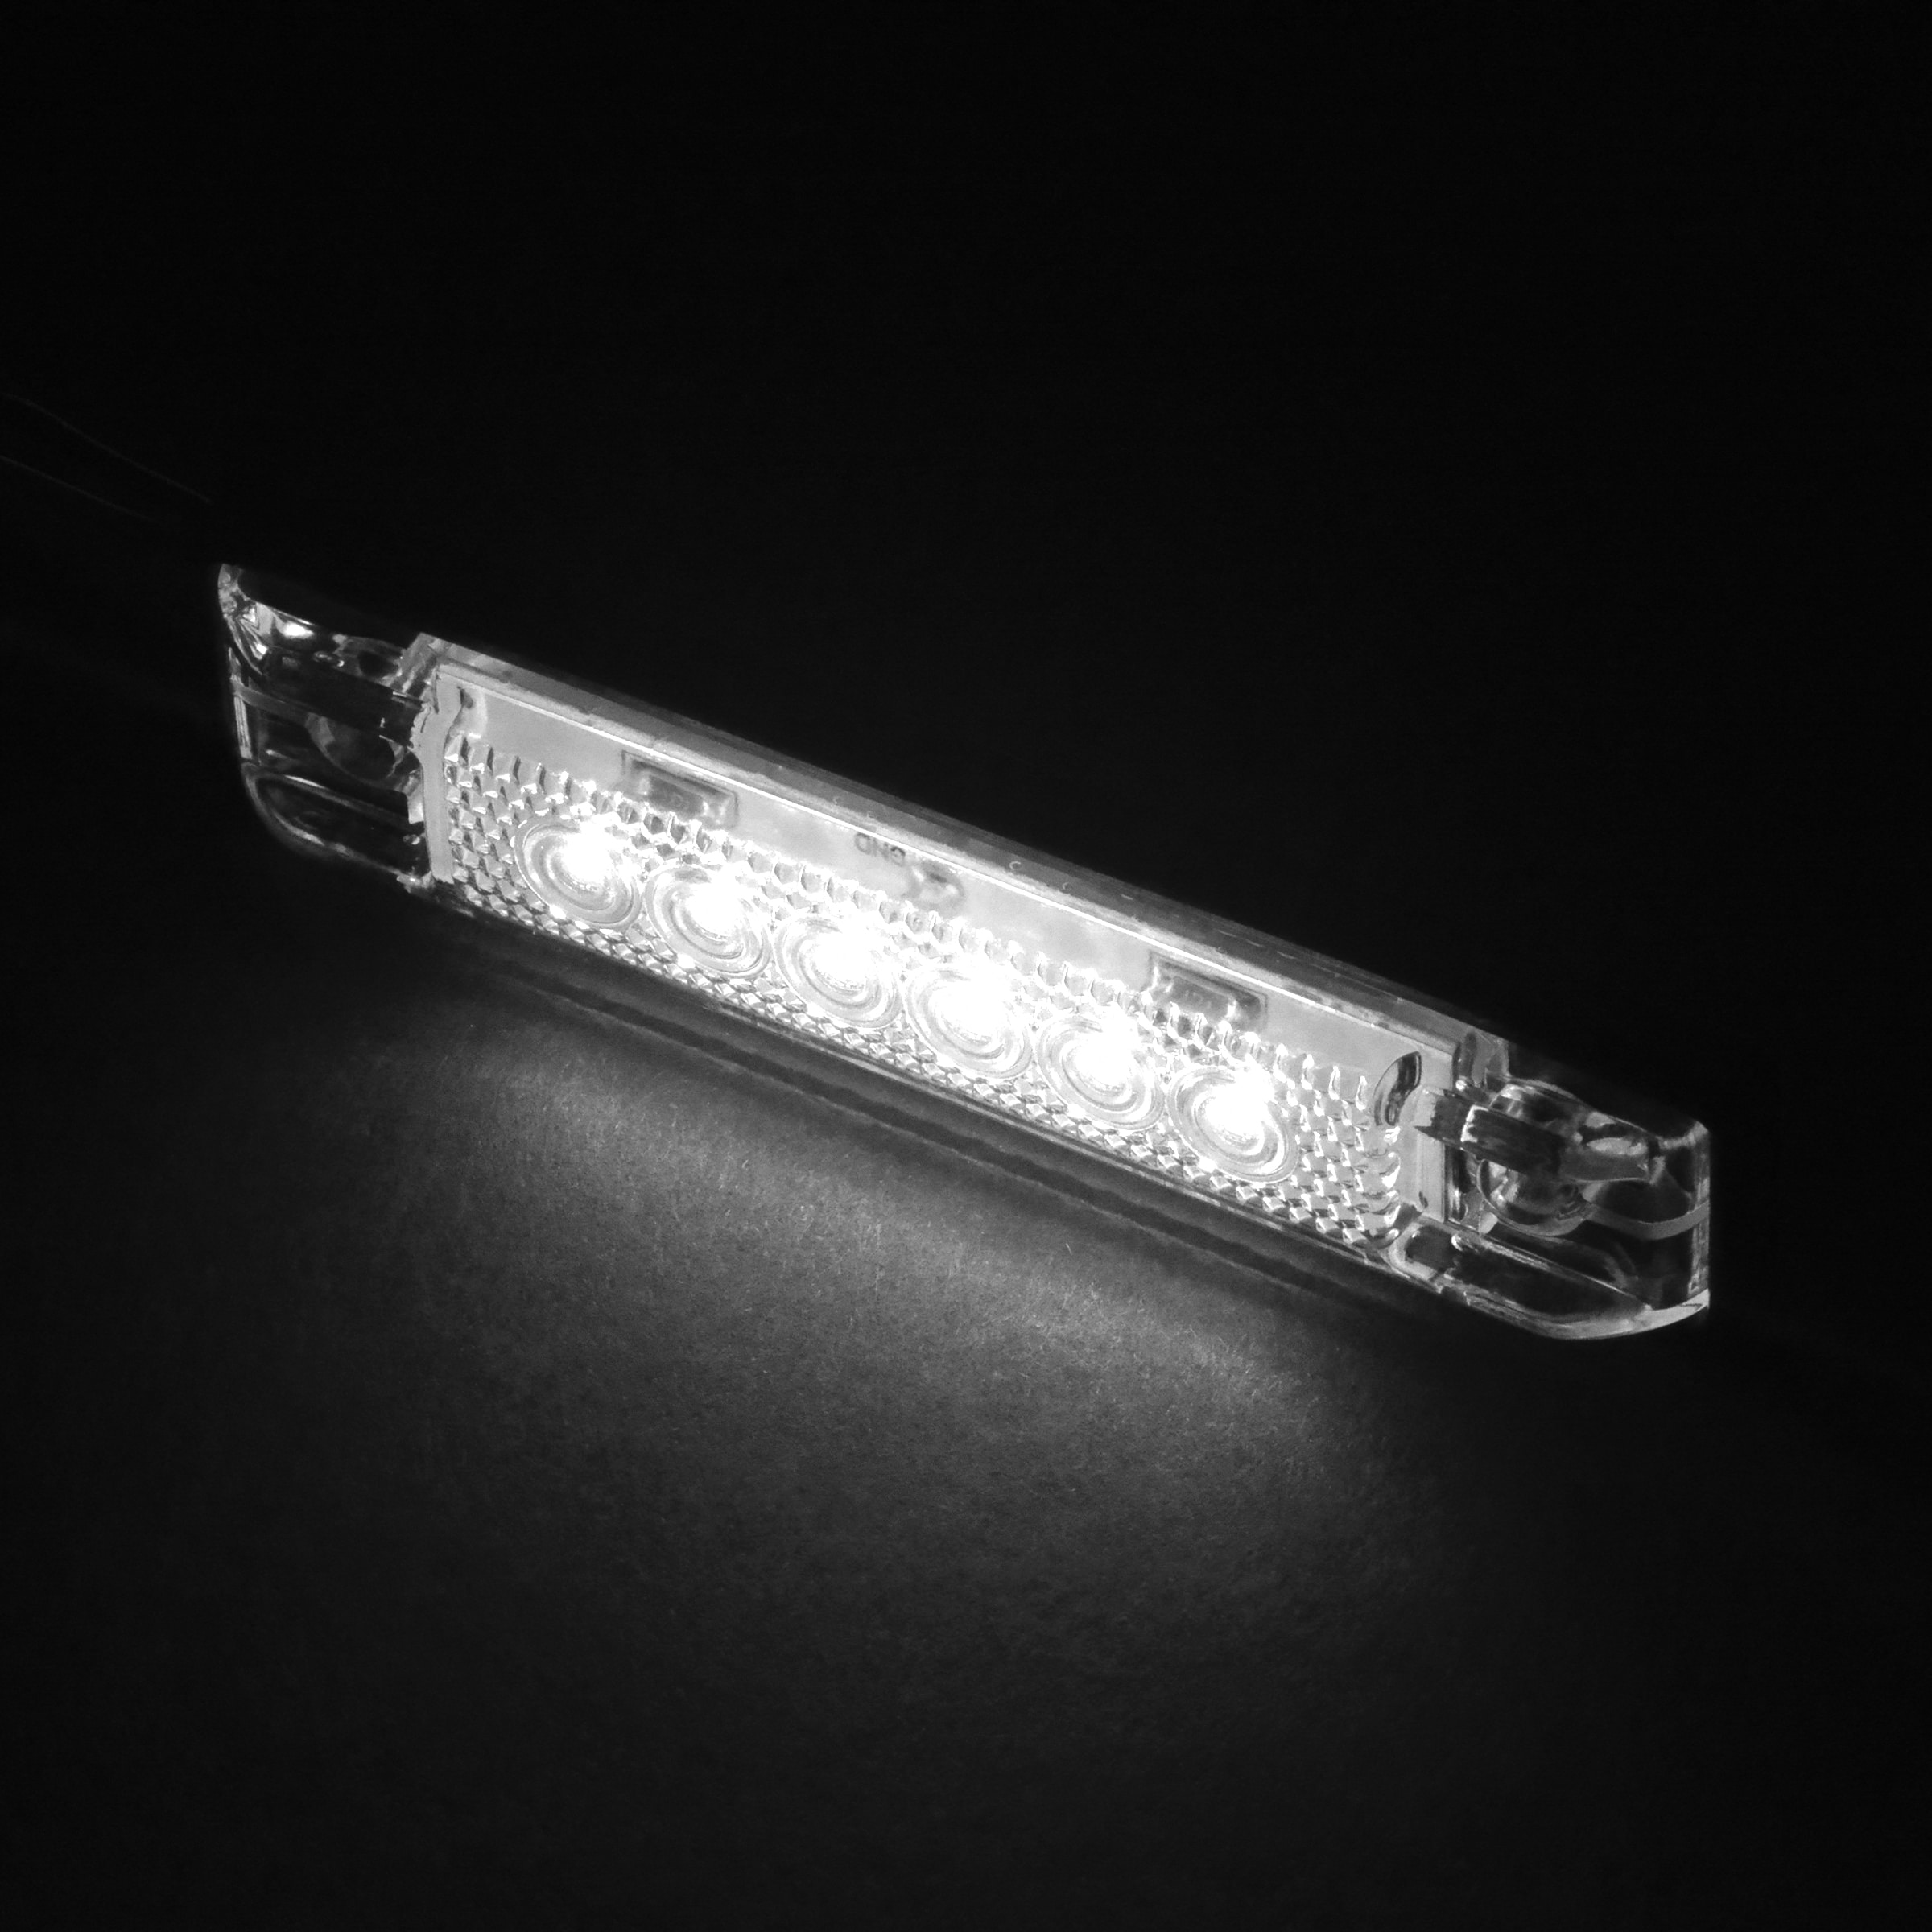 LED Snap Flex Stern Light - T-H Marine Supplies